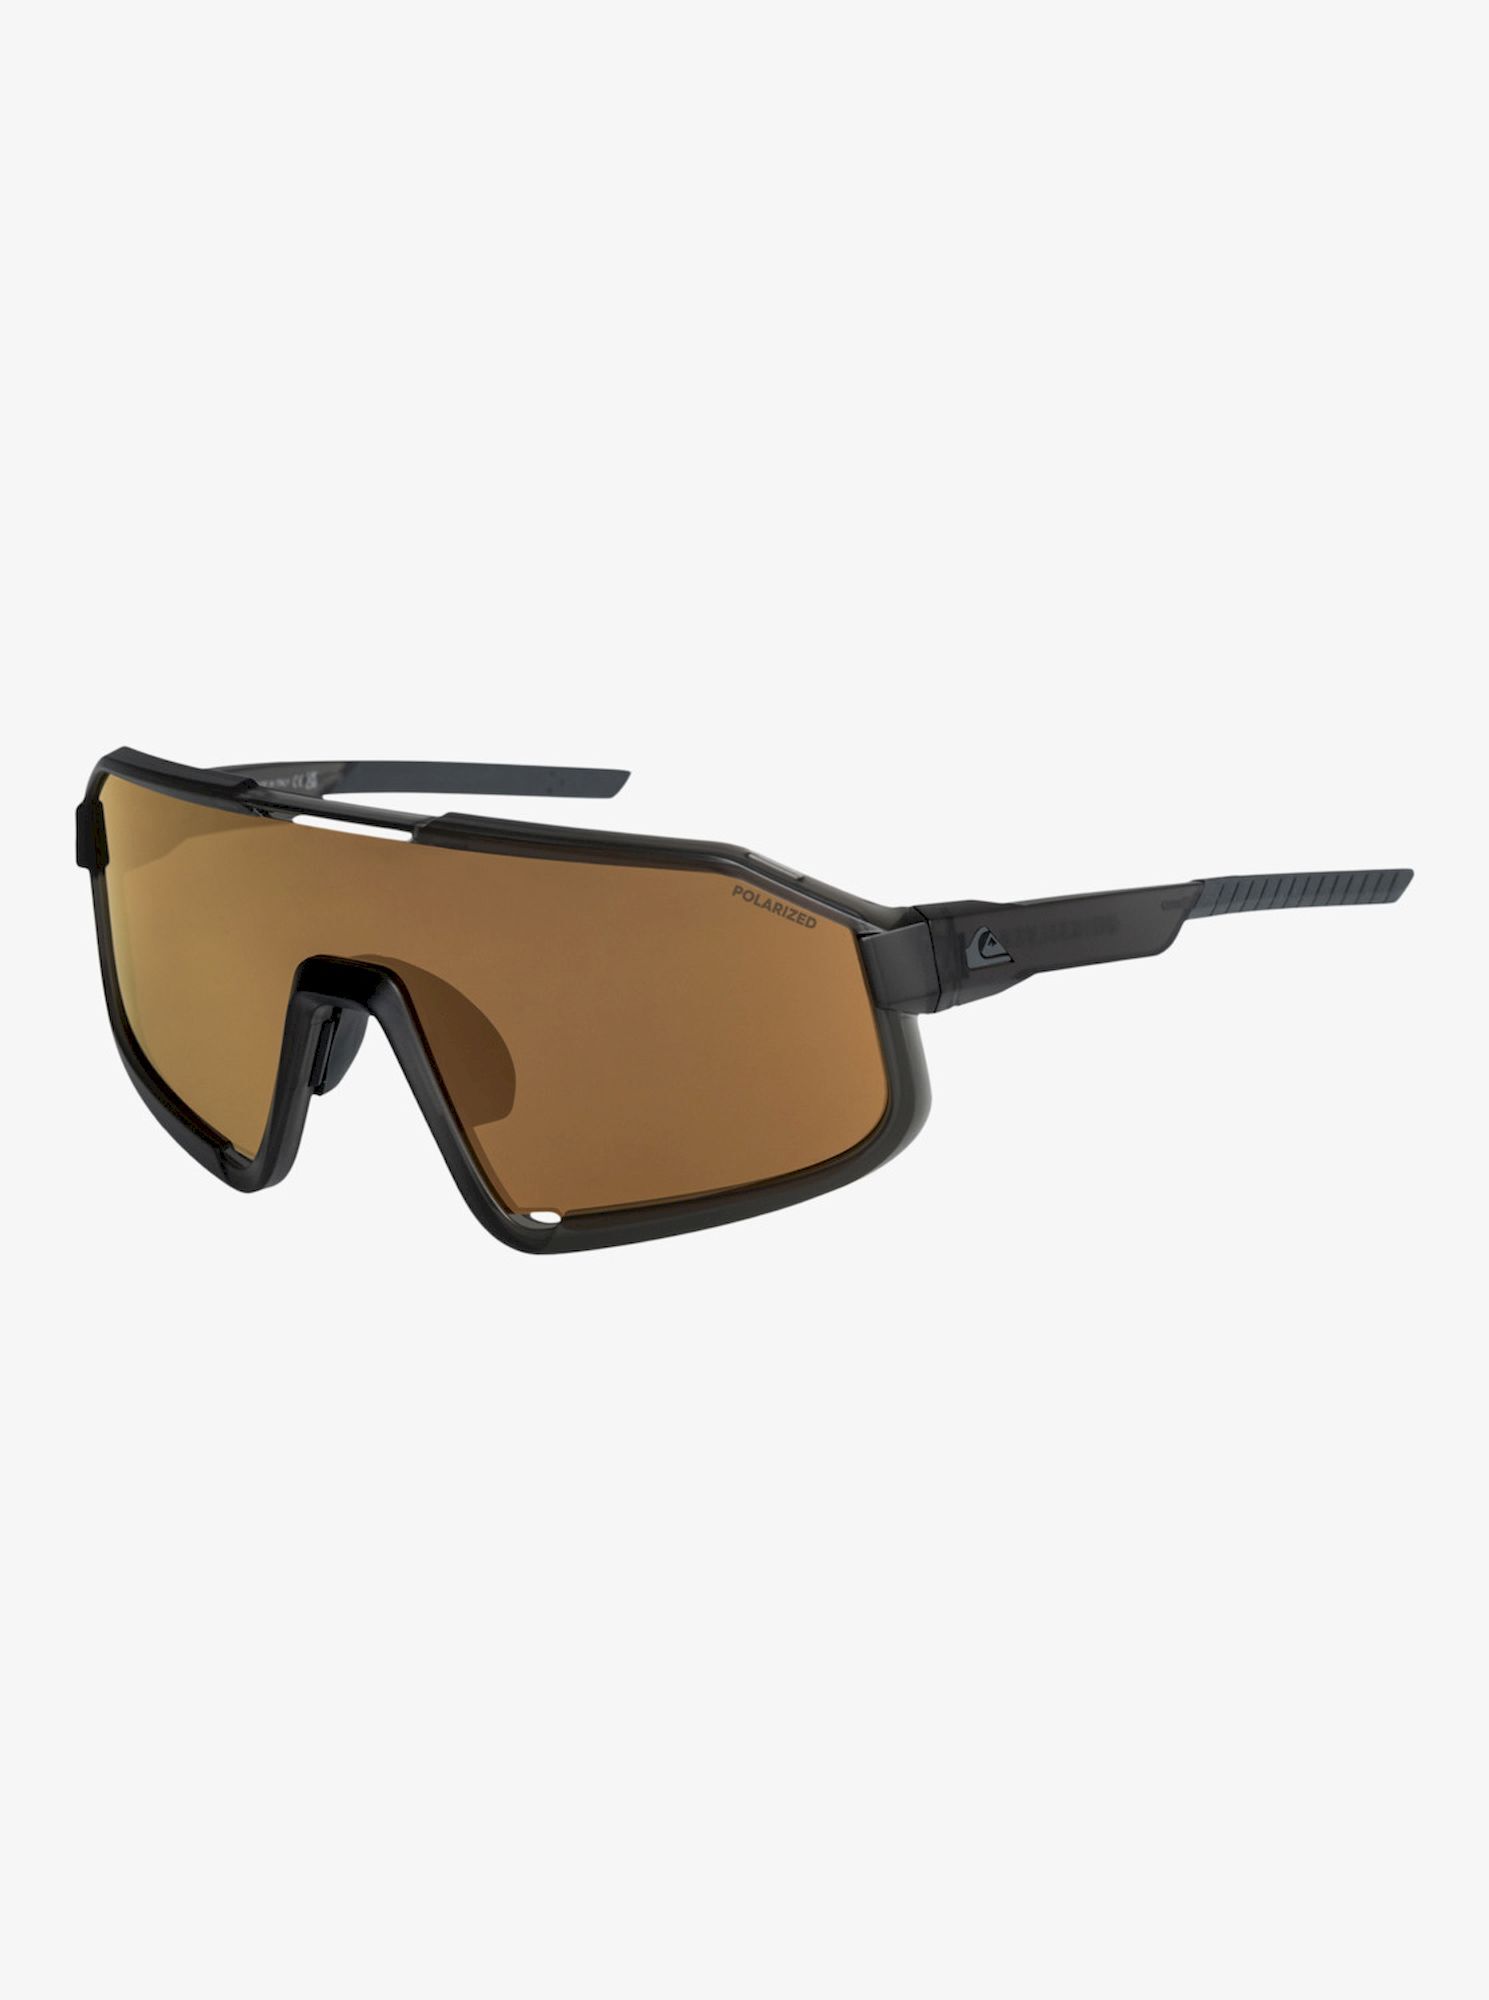 https://images.hardloop.fr/452039/quiksilver-slash-polarized-sunglasses-mens.jpg?w=auto&h=auto&q=80